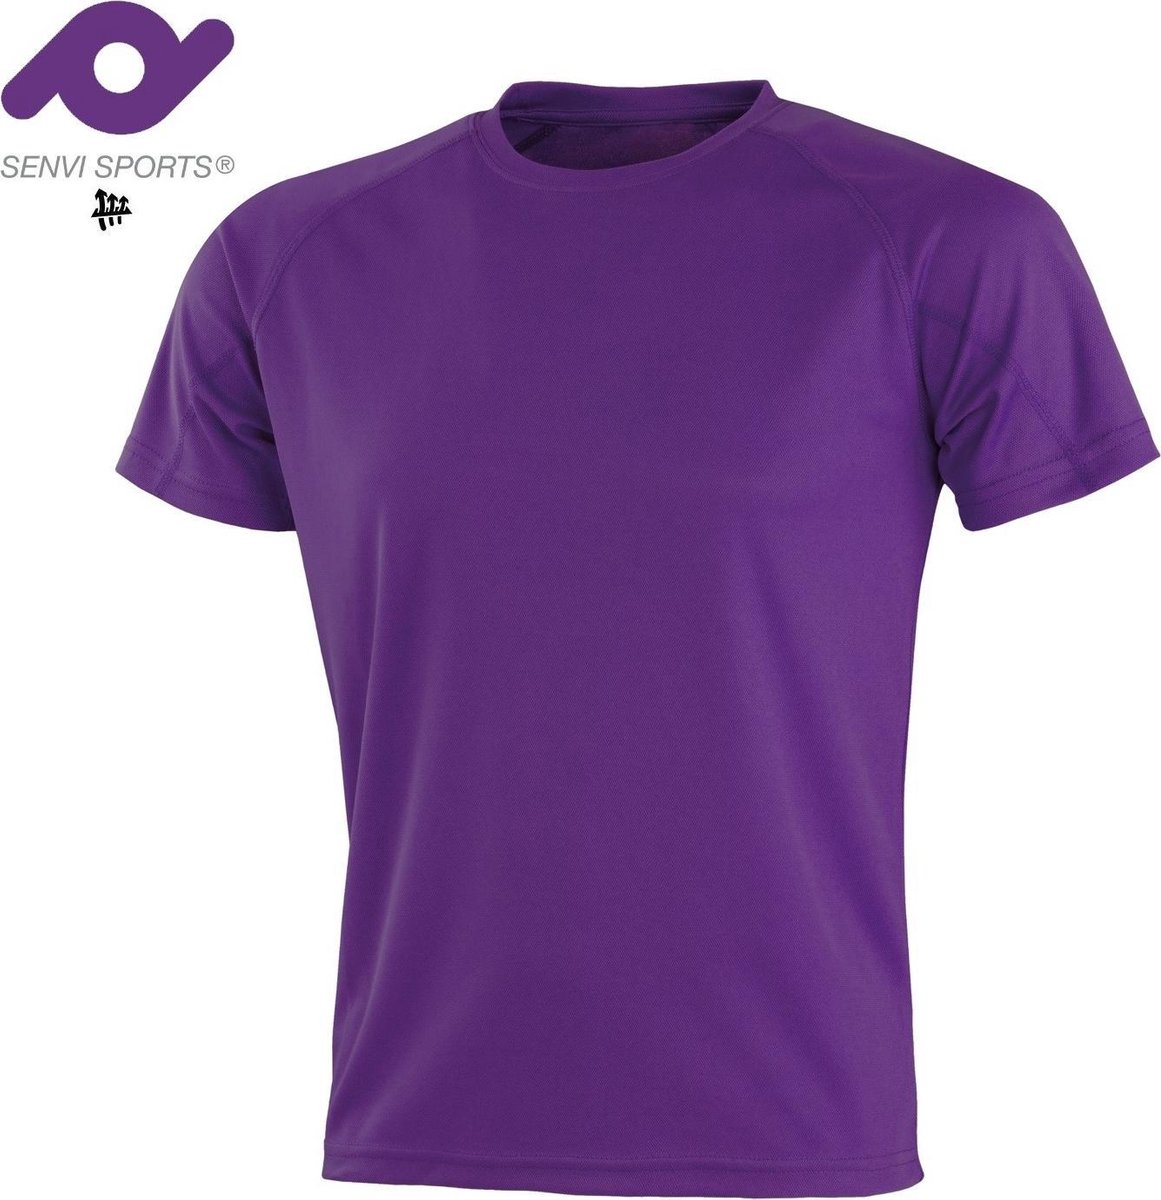 Senvi Sports Performance T-Shirt- Paars - XL - Unisex